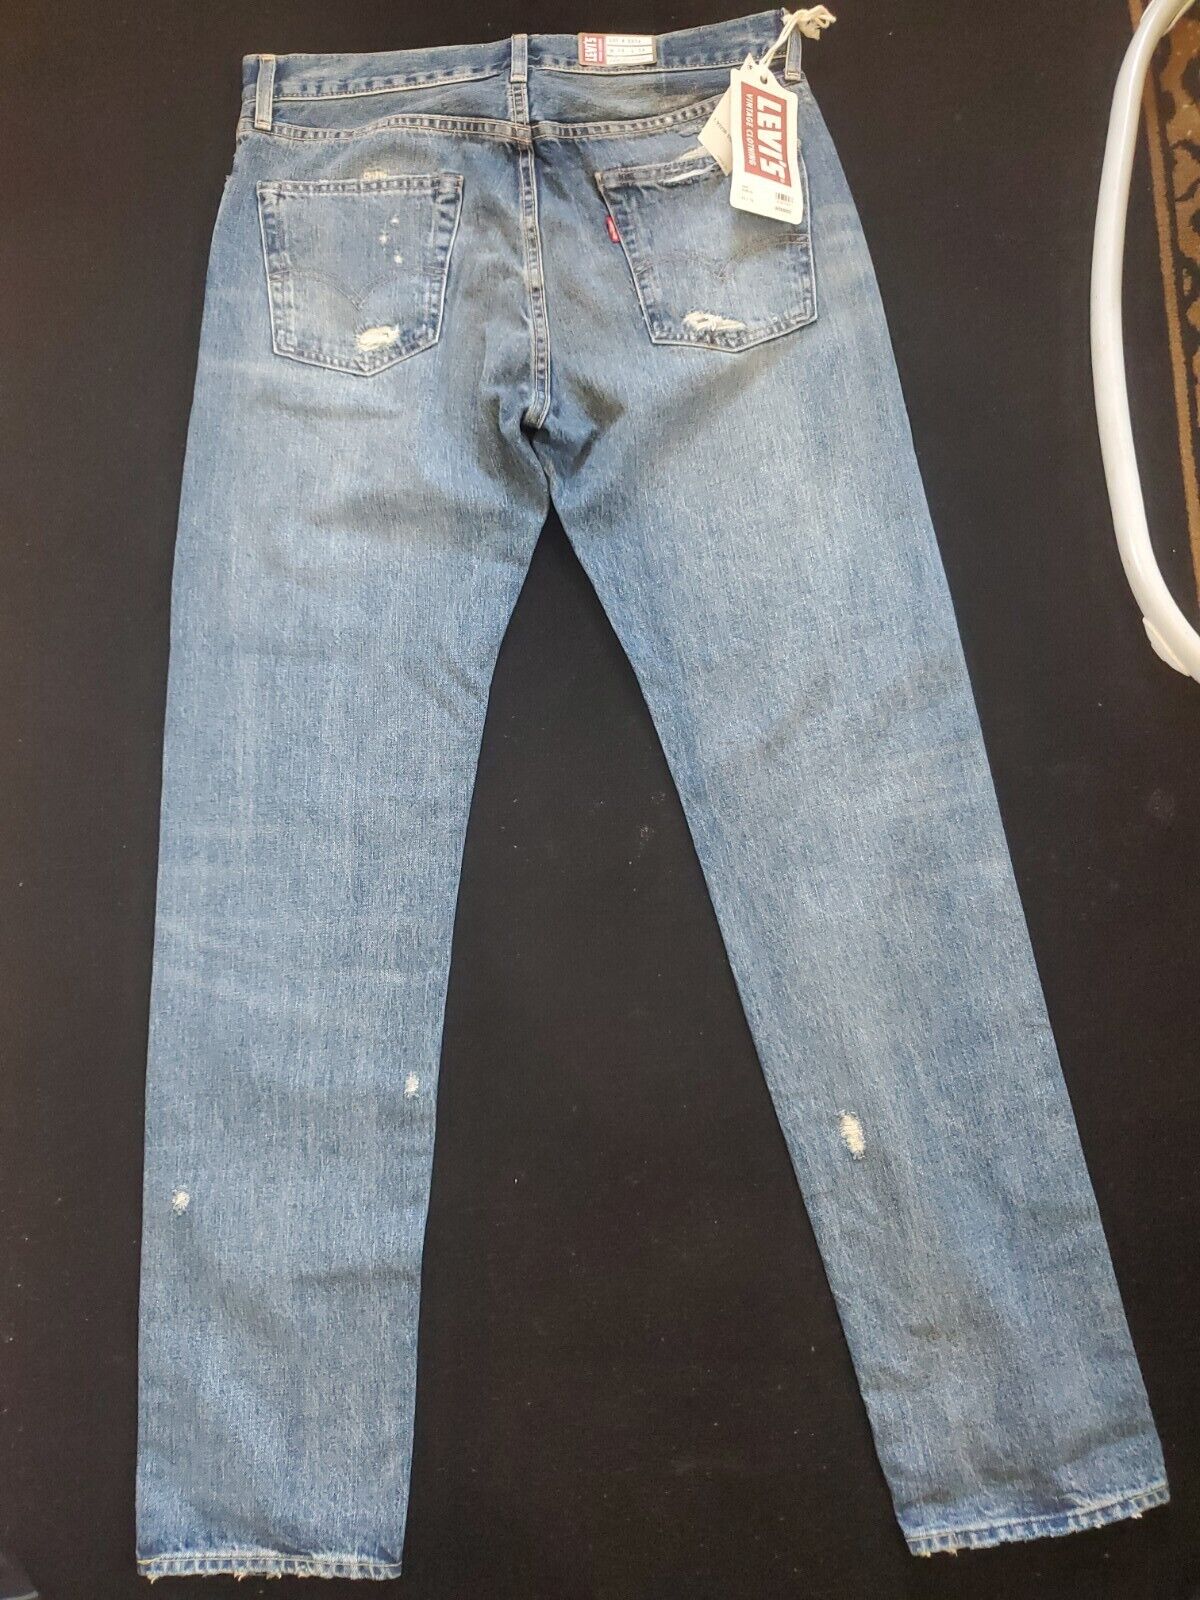 LEVI'S Vintage Clothing 1961 reproduction 551z slim straight jeans $395  34×34